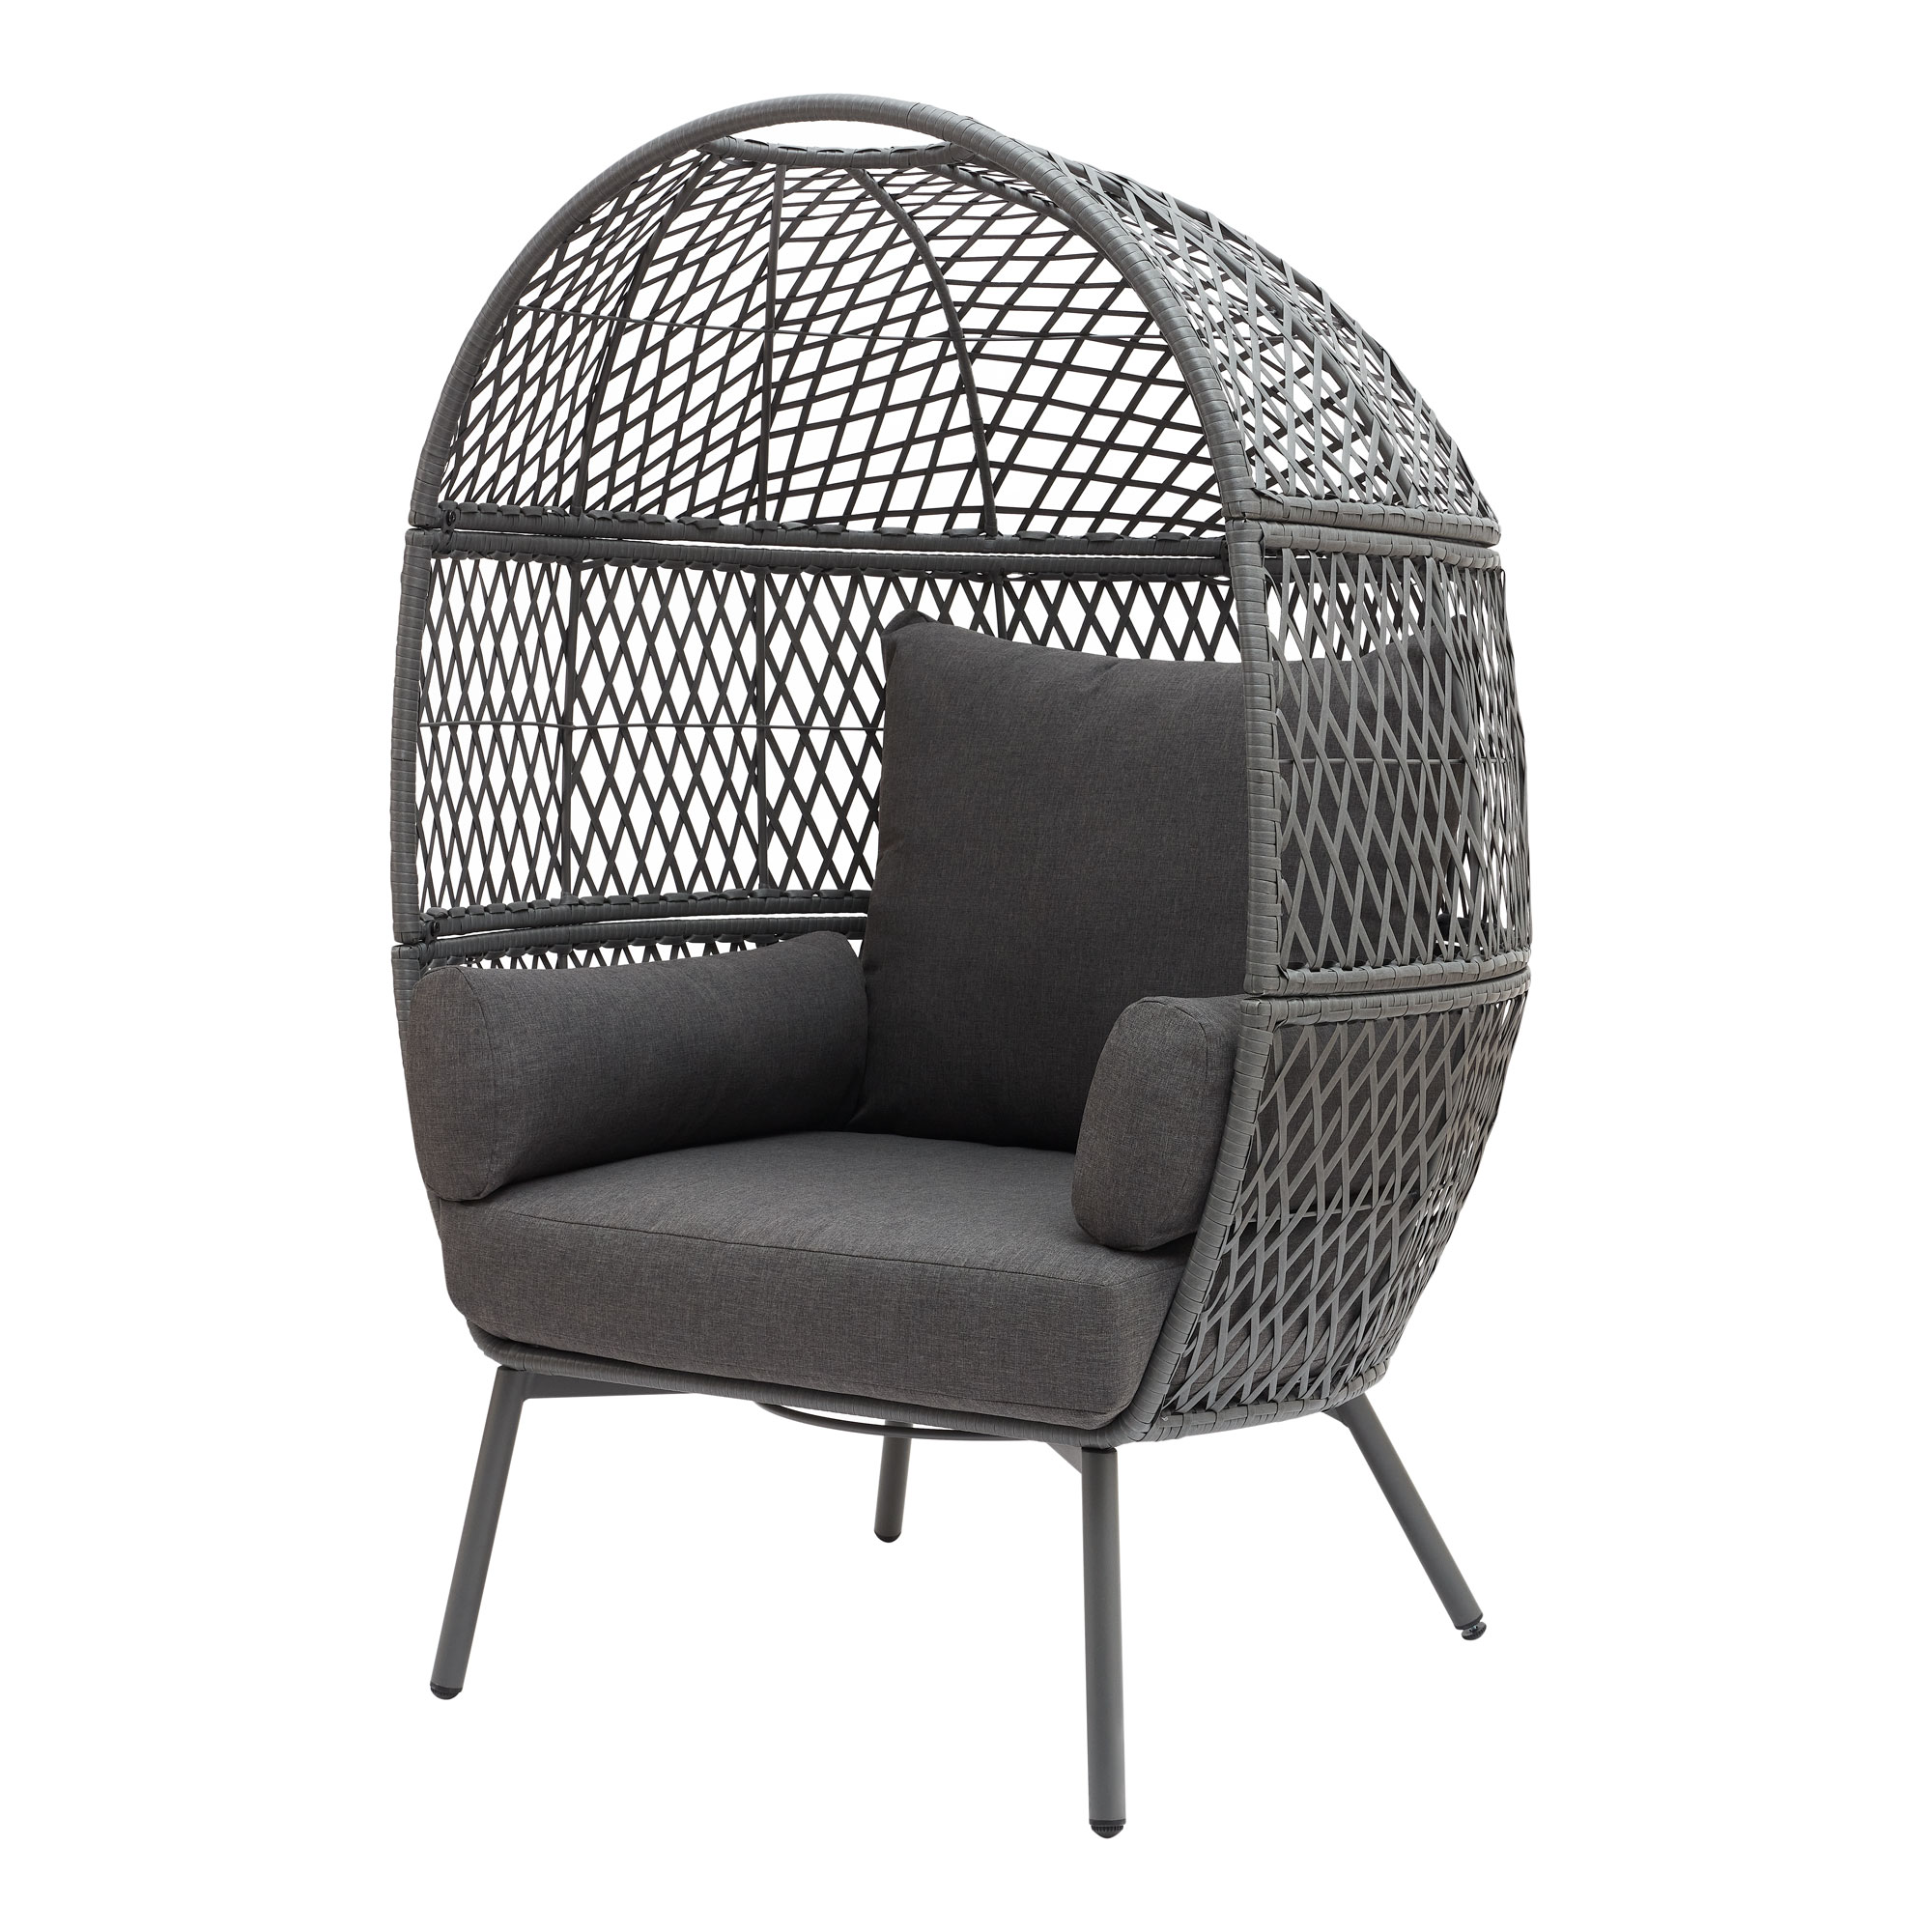 Better Homes & Garden Ventura Steel Stationary Wicker Egg Chair – Mono Gray - image 1 of 6